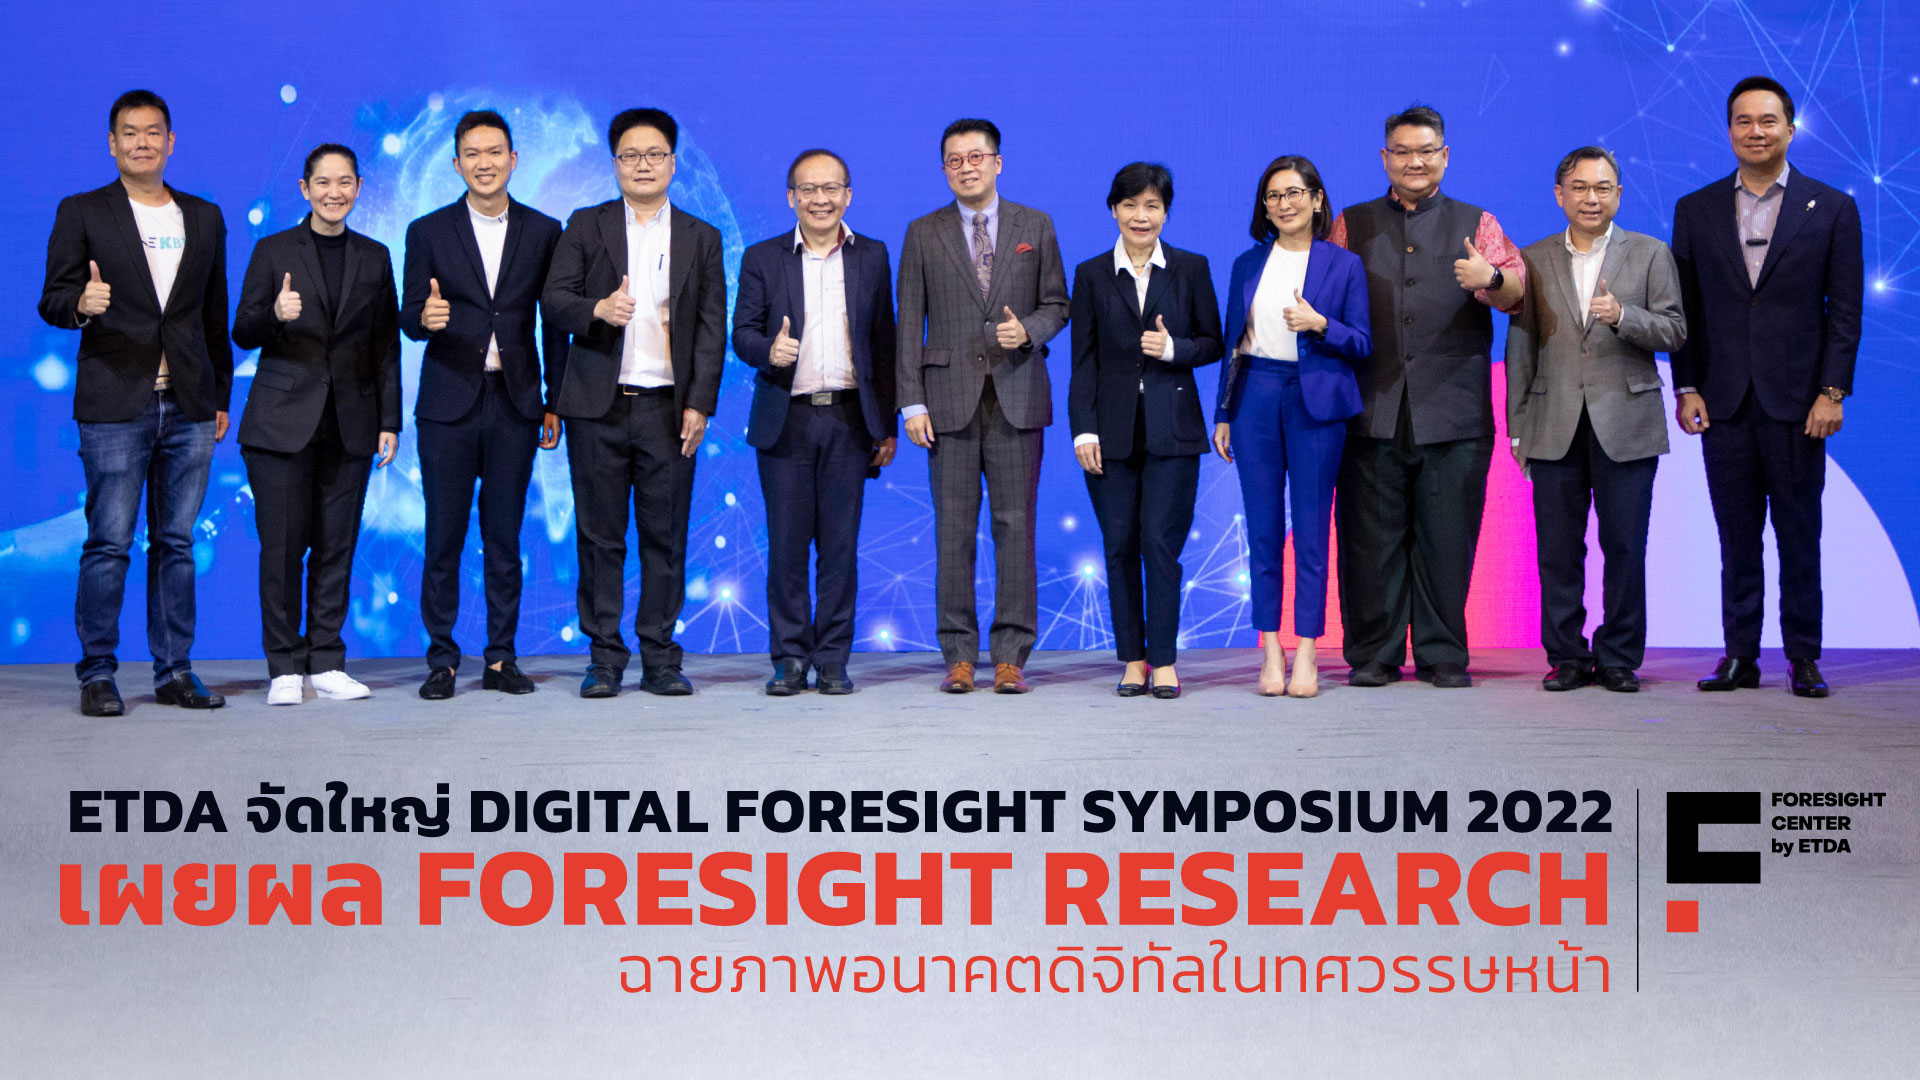 ETDA จัดใหญ่ Digital Foresight Symposium 2022  เผยผล Foresight Research ฉายภาพอนาคตดิจิทัลในทศวรรษหน